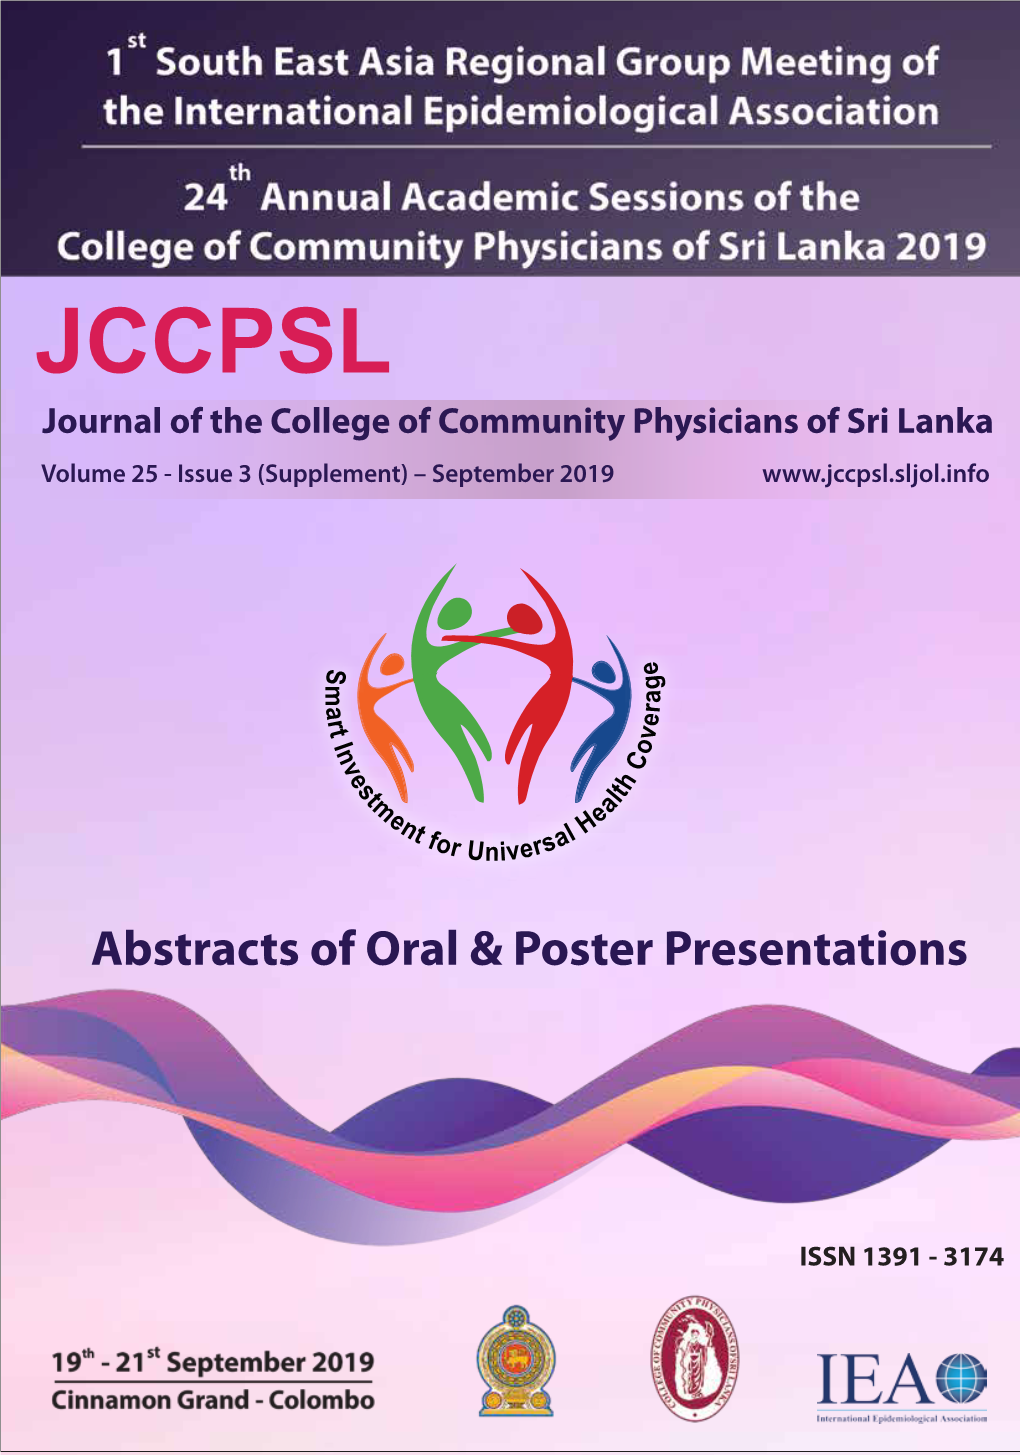 JCCPSL Journal of the College of Community Physicians of Sri Lanka